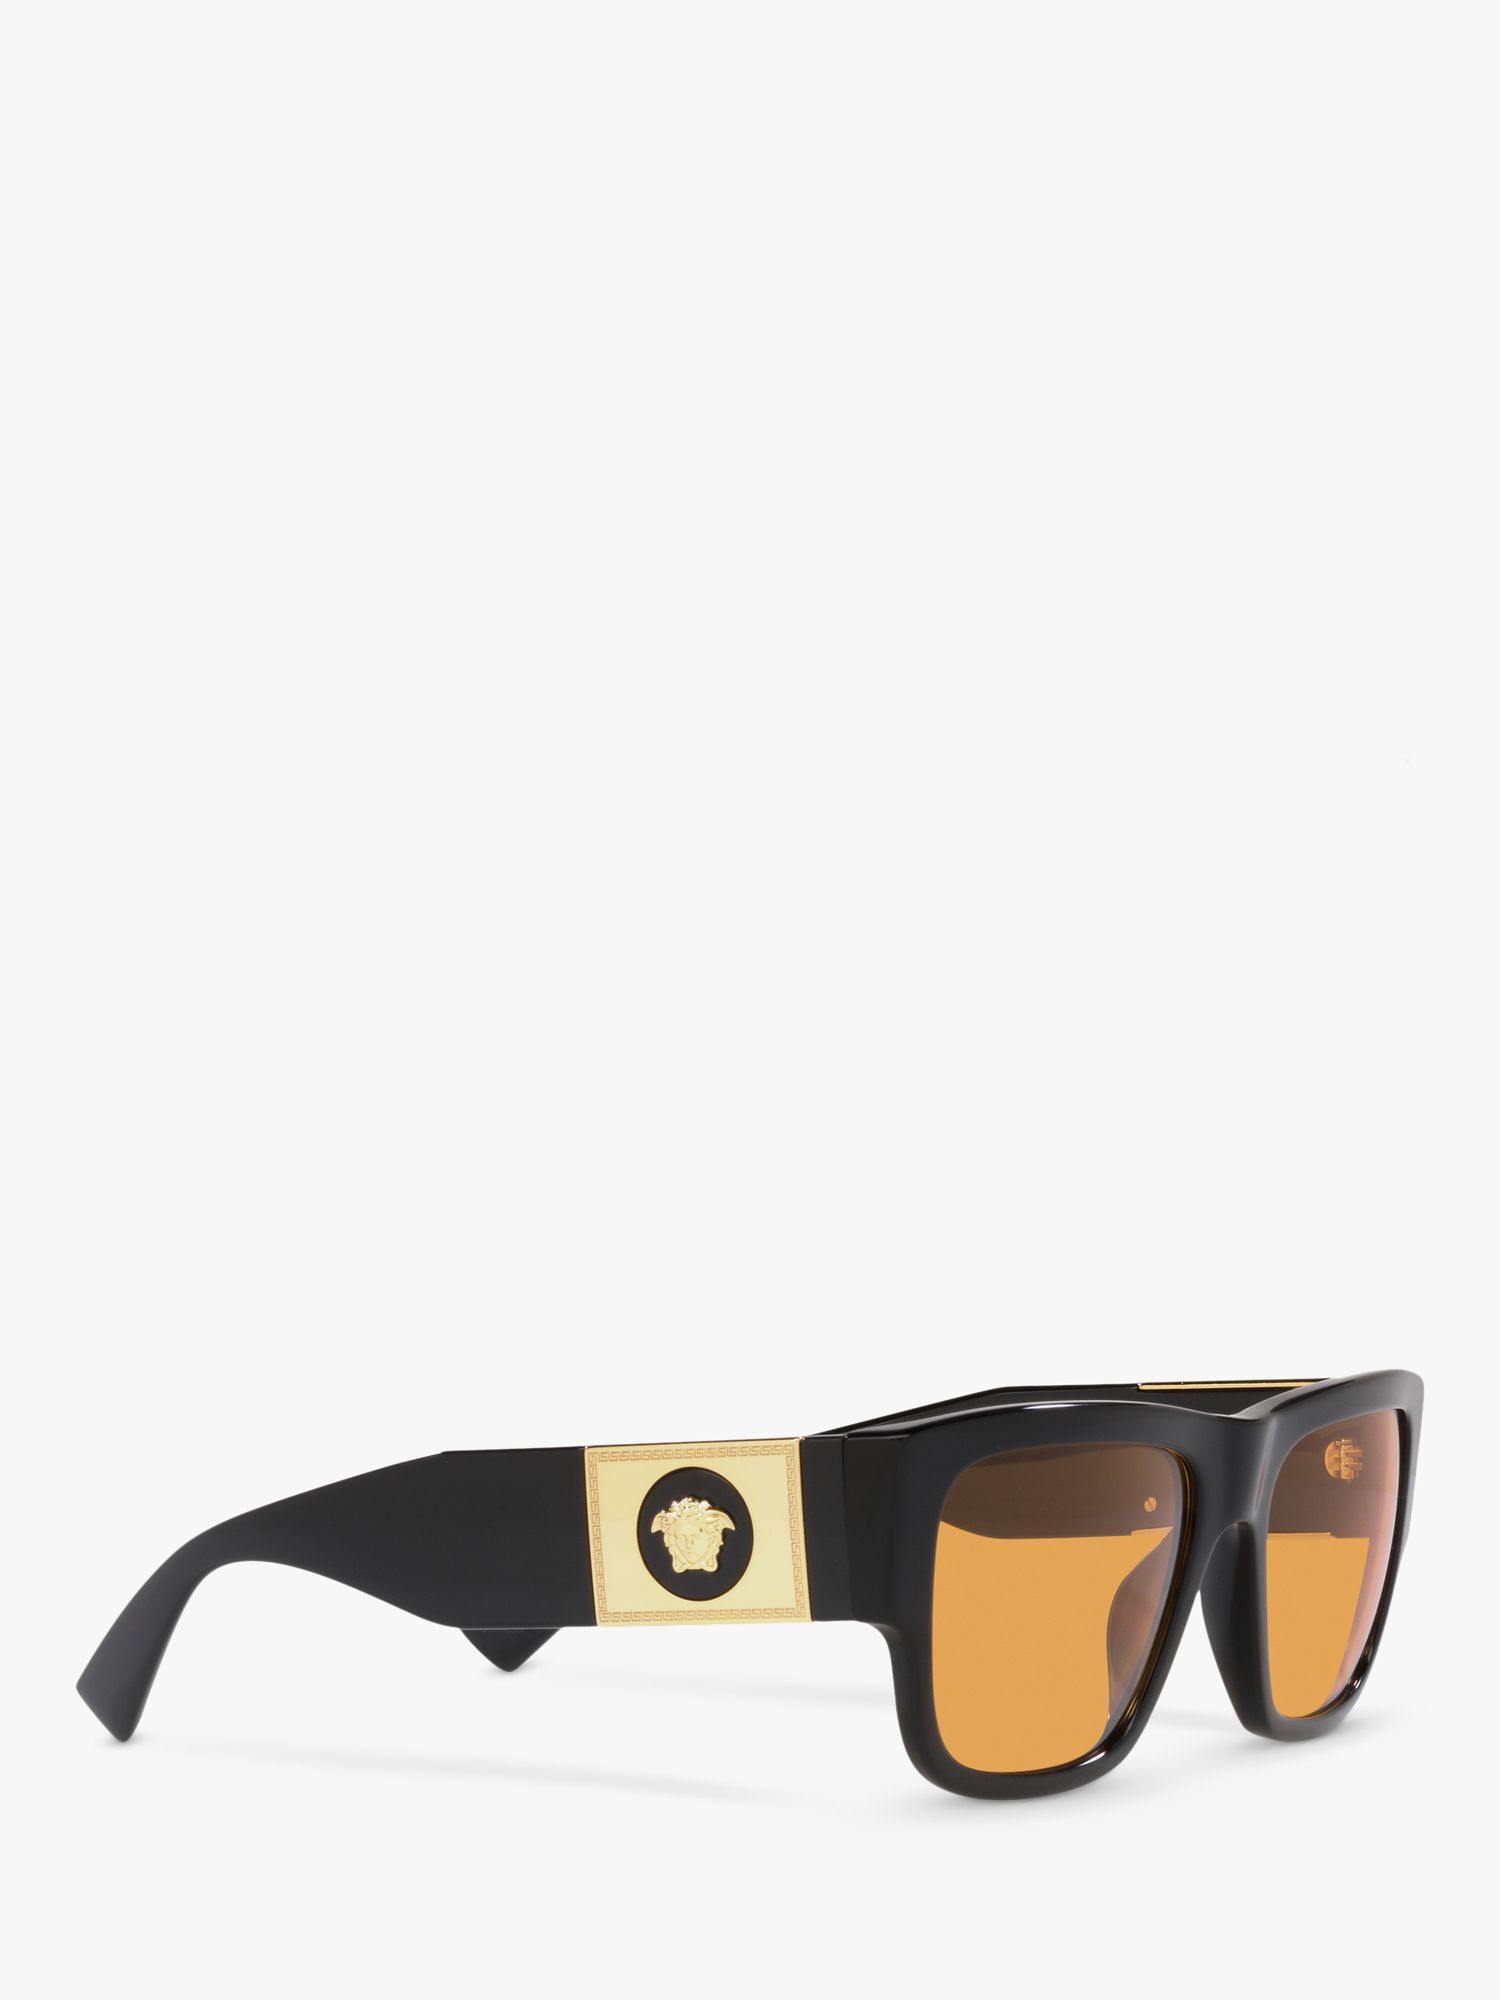 Buy Versace VE4406 Men's Rectangular Sunglasses, Black/Orange Online at johnlewis.com